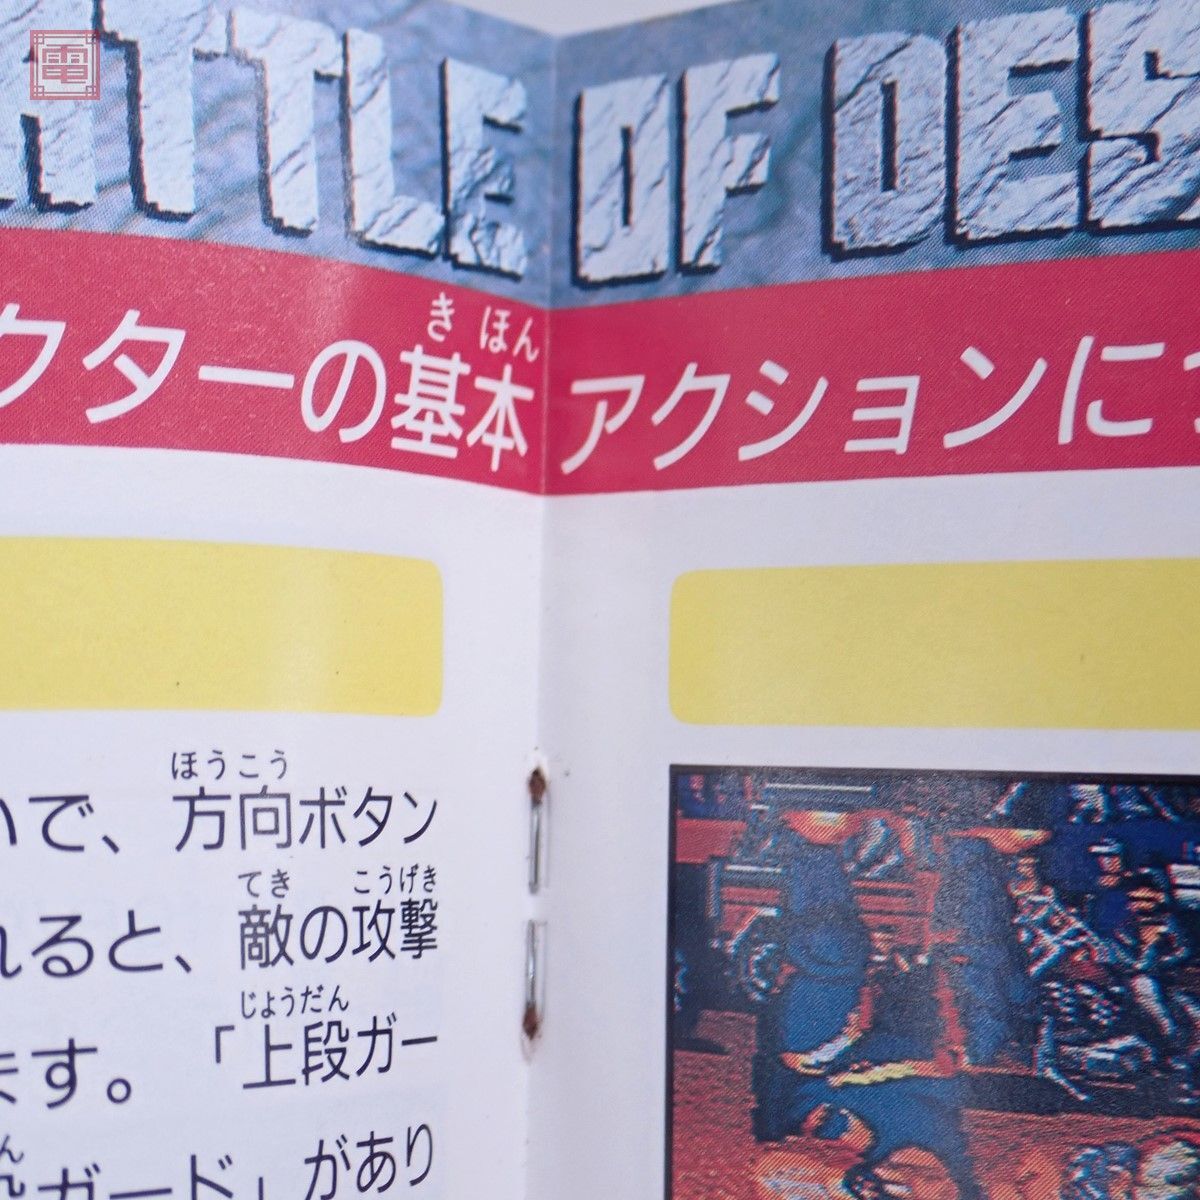  operation guarantee goods MD Mega Drive Fatal Fury 2 new ... Takara TAKARA box opinion attaching [10